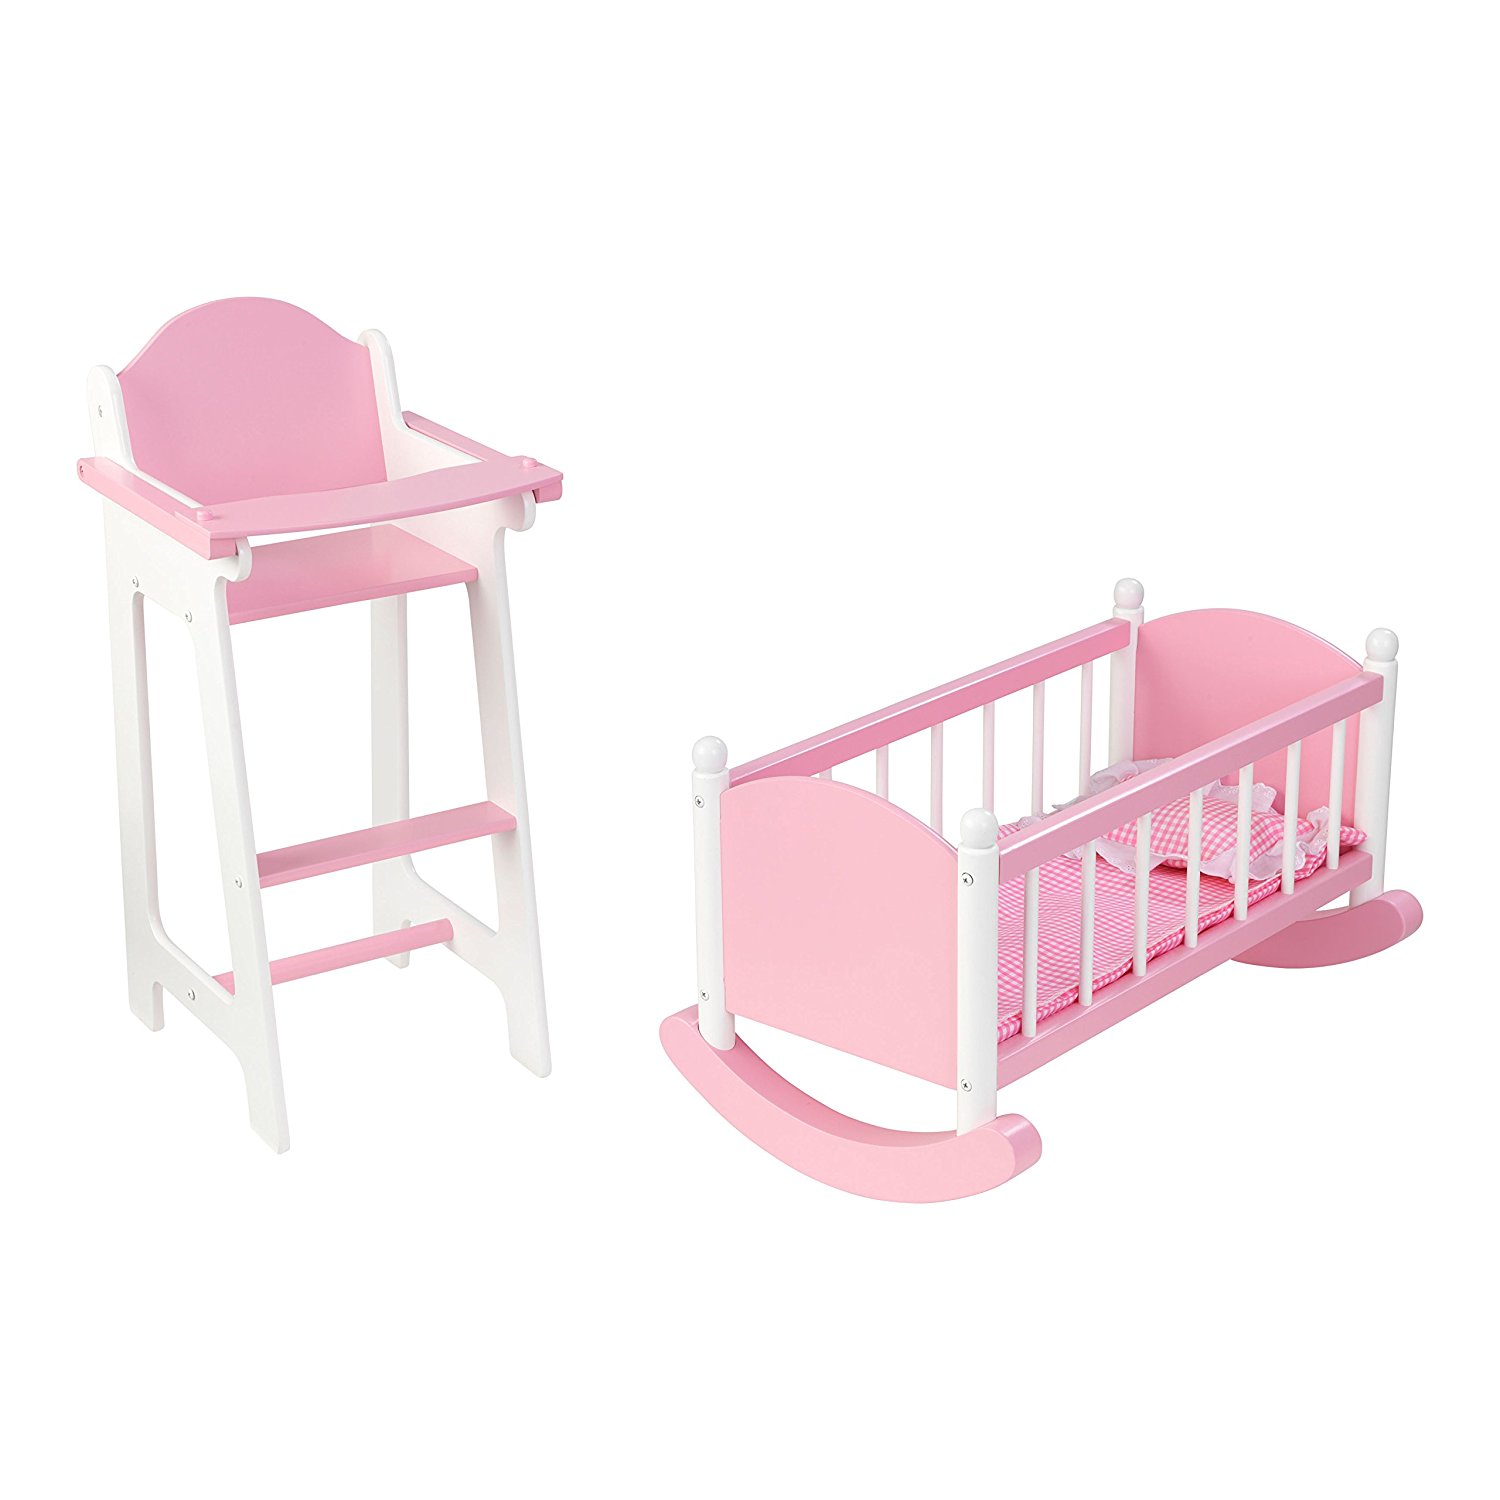 doll cradle chair set.jpg